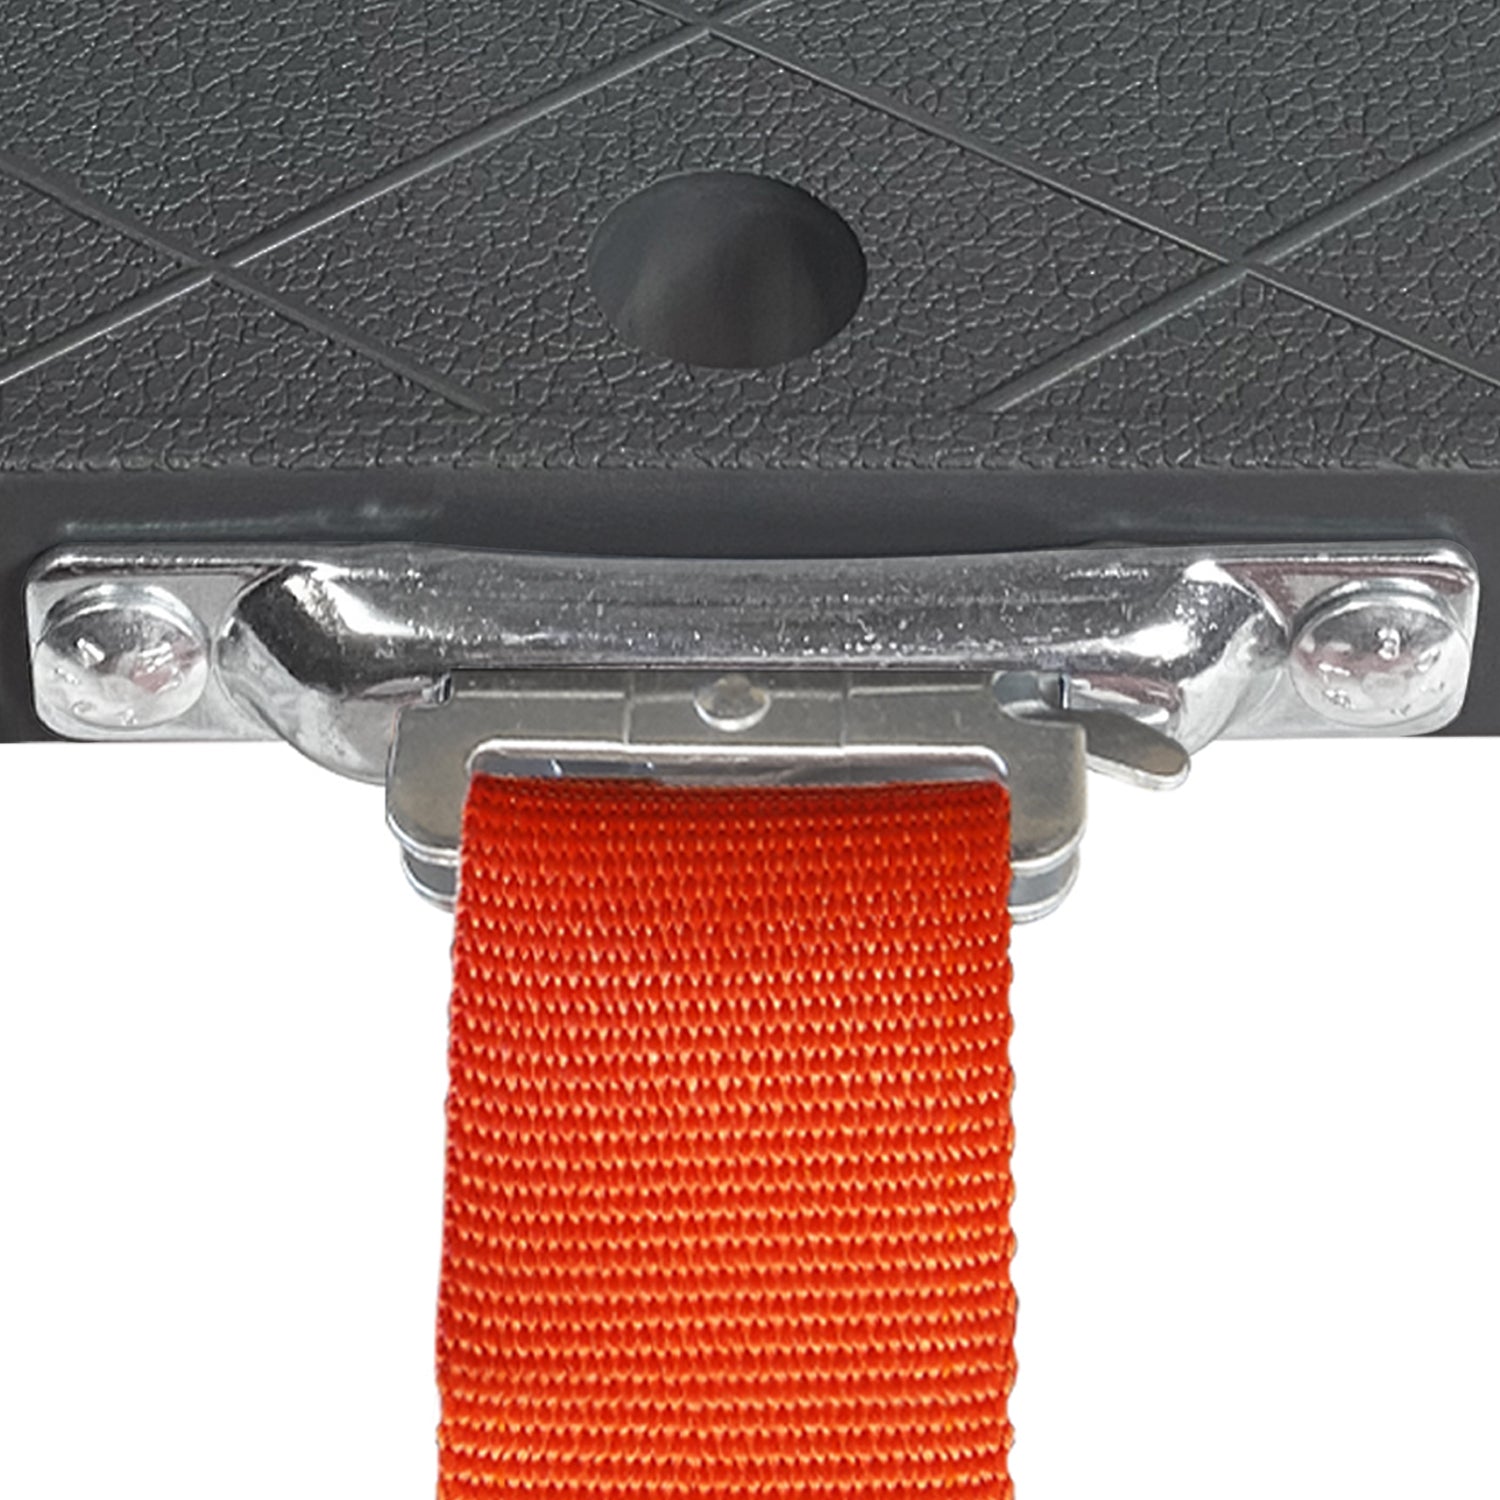 Snap-Loc Ladder Safety Strap Kit SLCLSSK